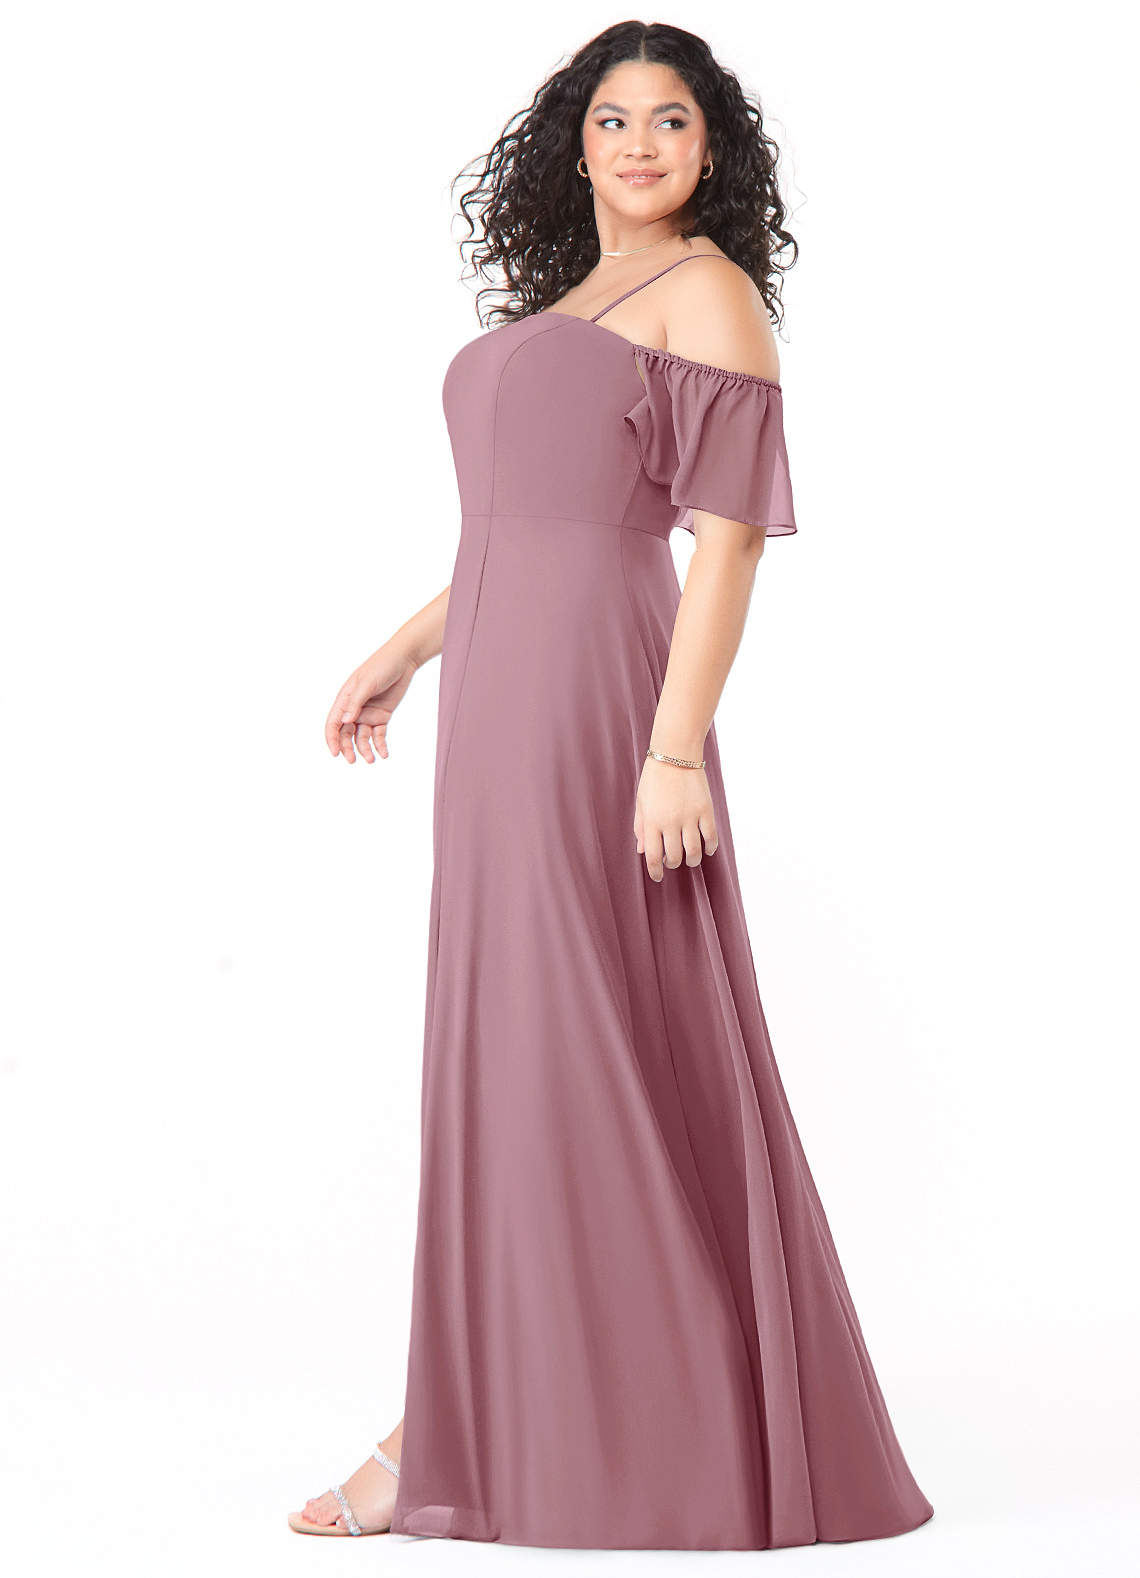 Azazie Sue Bridesmaid Dresses A-Line Off the Shoulder Chiffon Floor-Length Dress image1